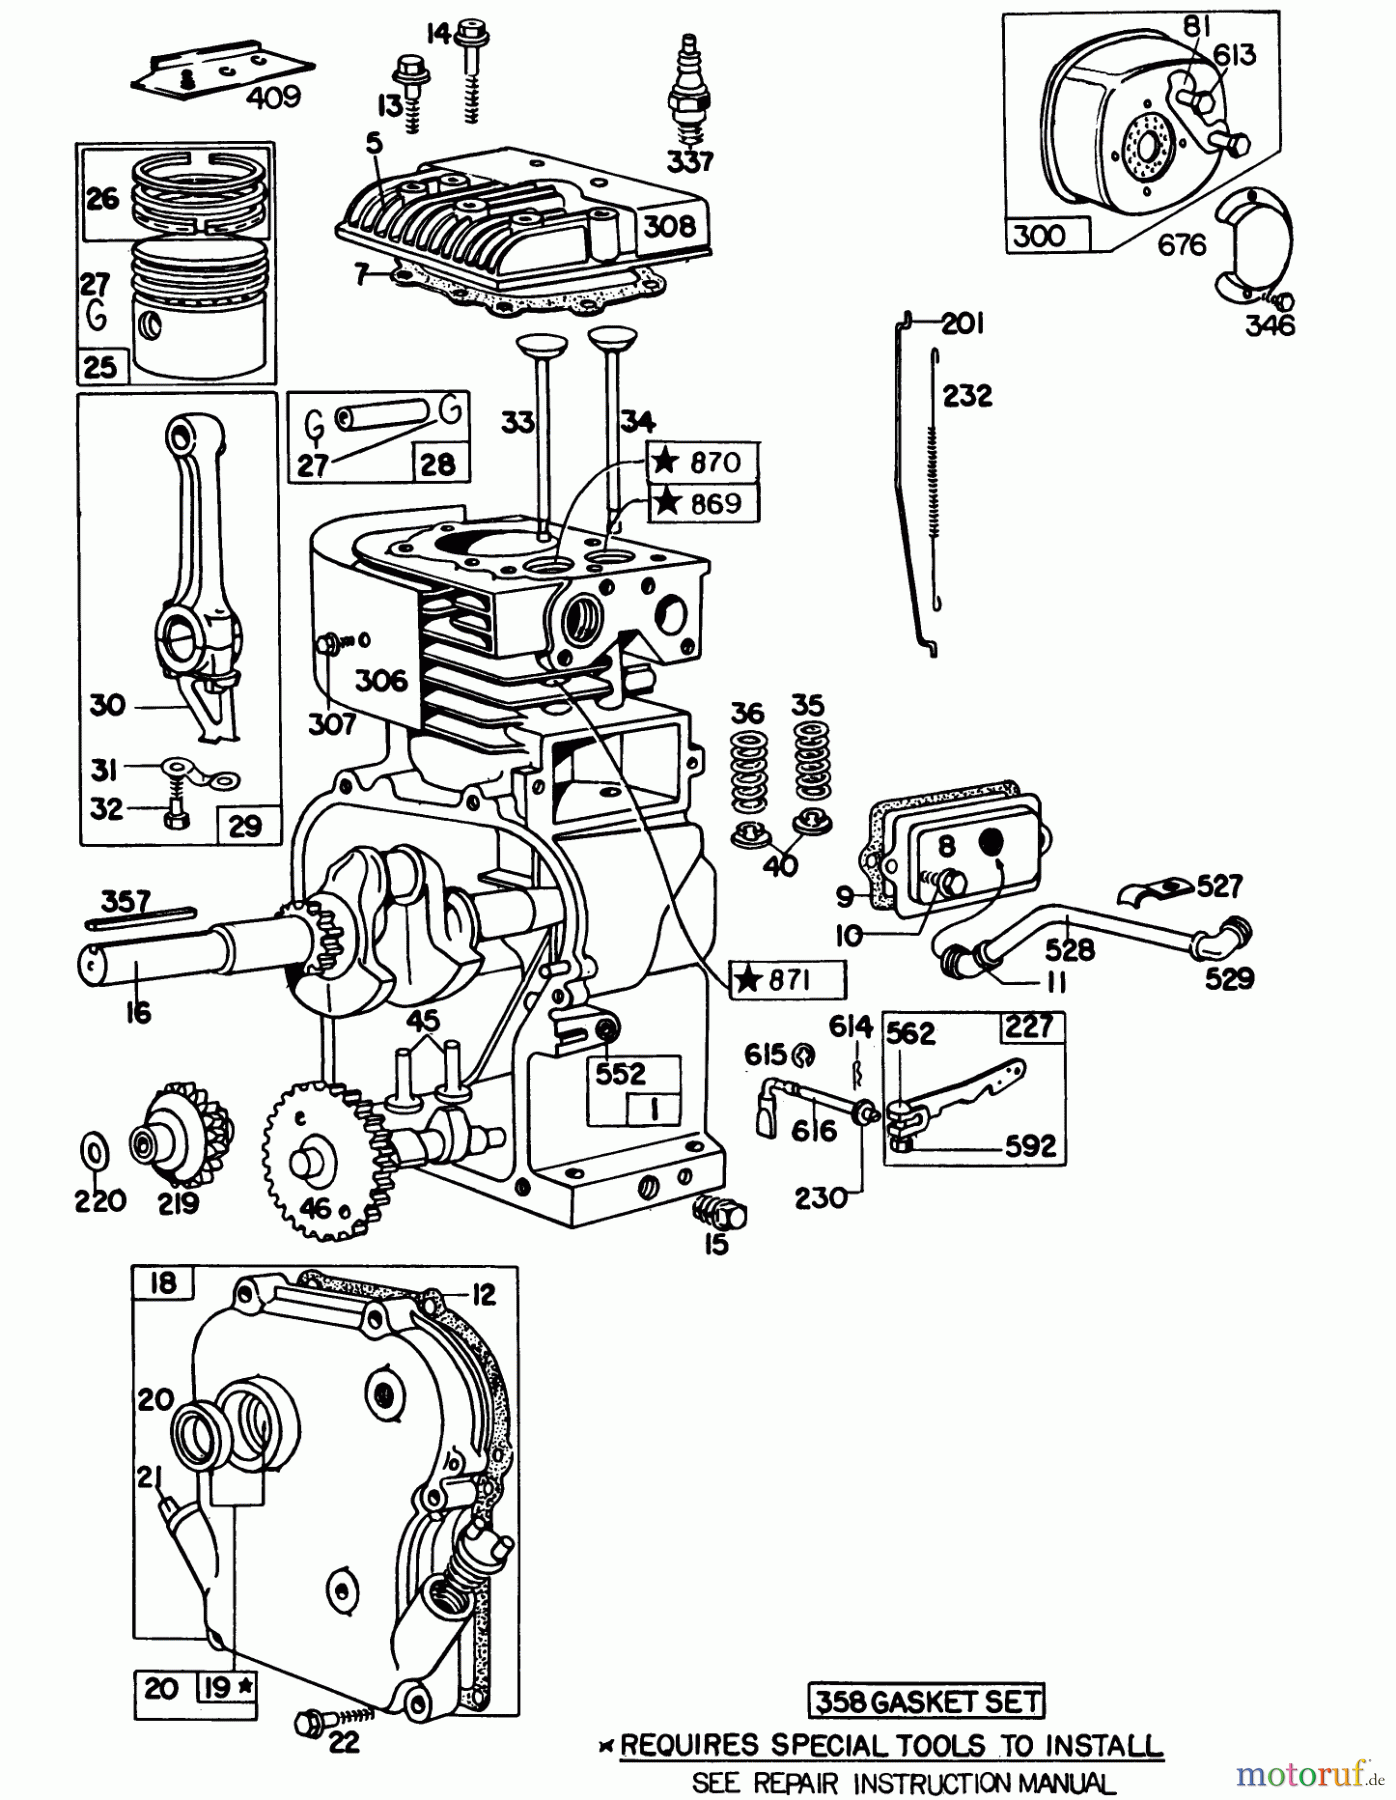  Toro Neu Blowers/Vacuums/Chippers/Shredders 62933 - Toro 5 hp Lawn Blower, 1980 (0000001-0999999) ENGINE MODEL NO. 130202 TYPE 0600-01 BRIGGS & STRATTON